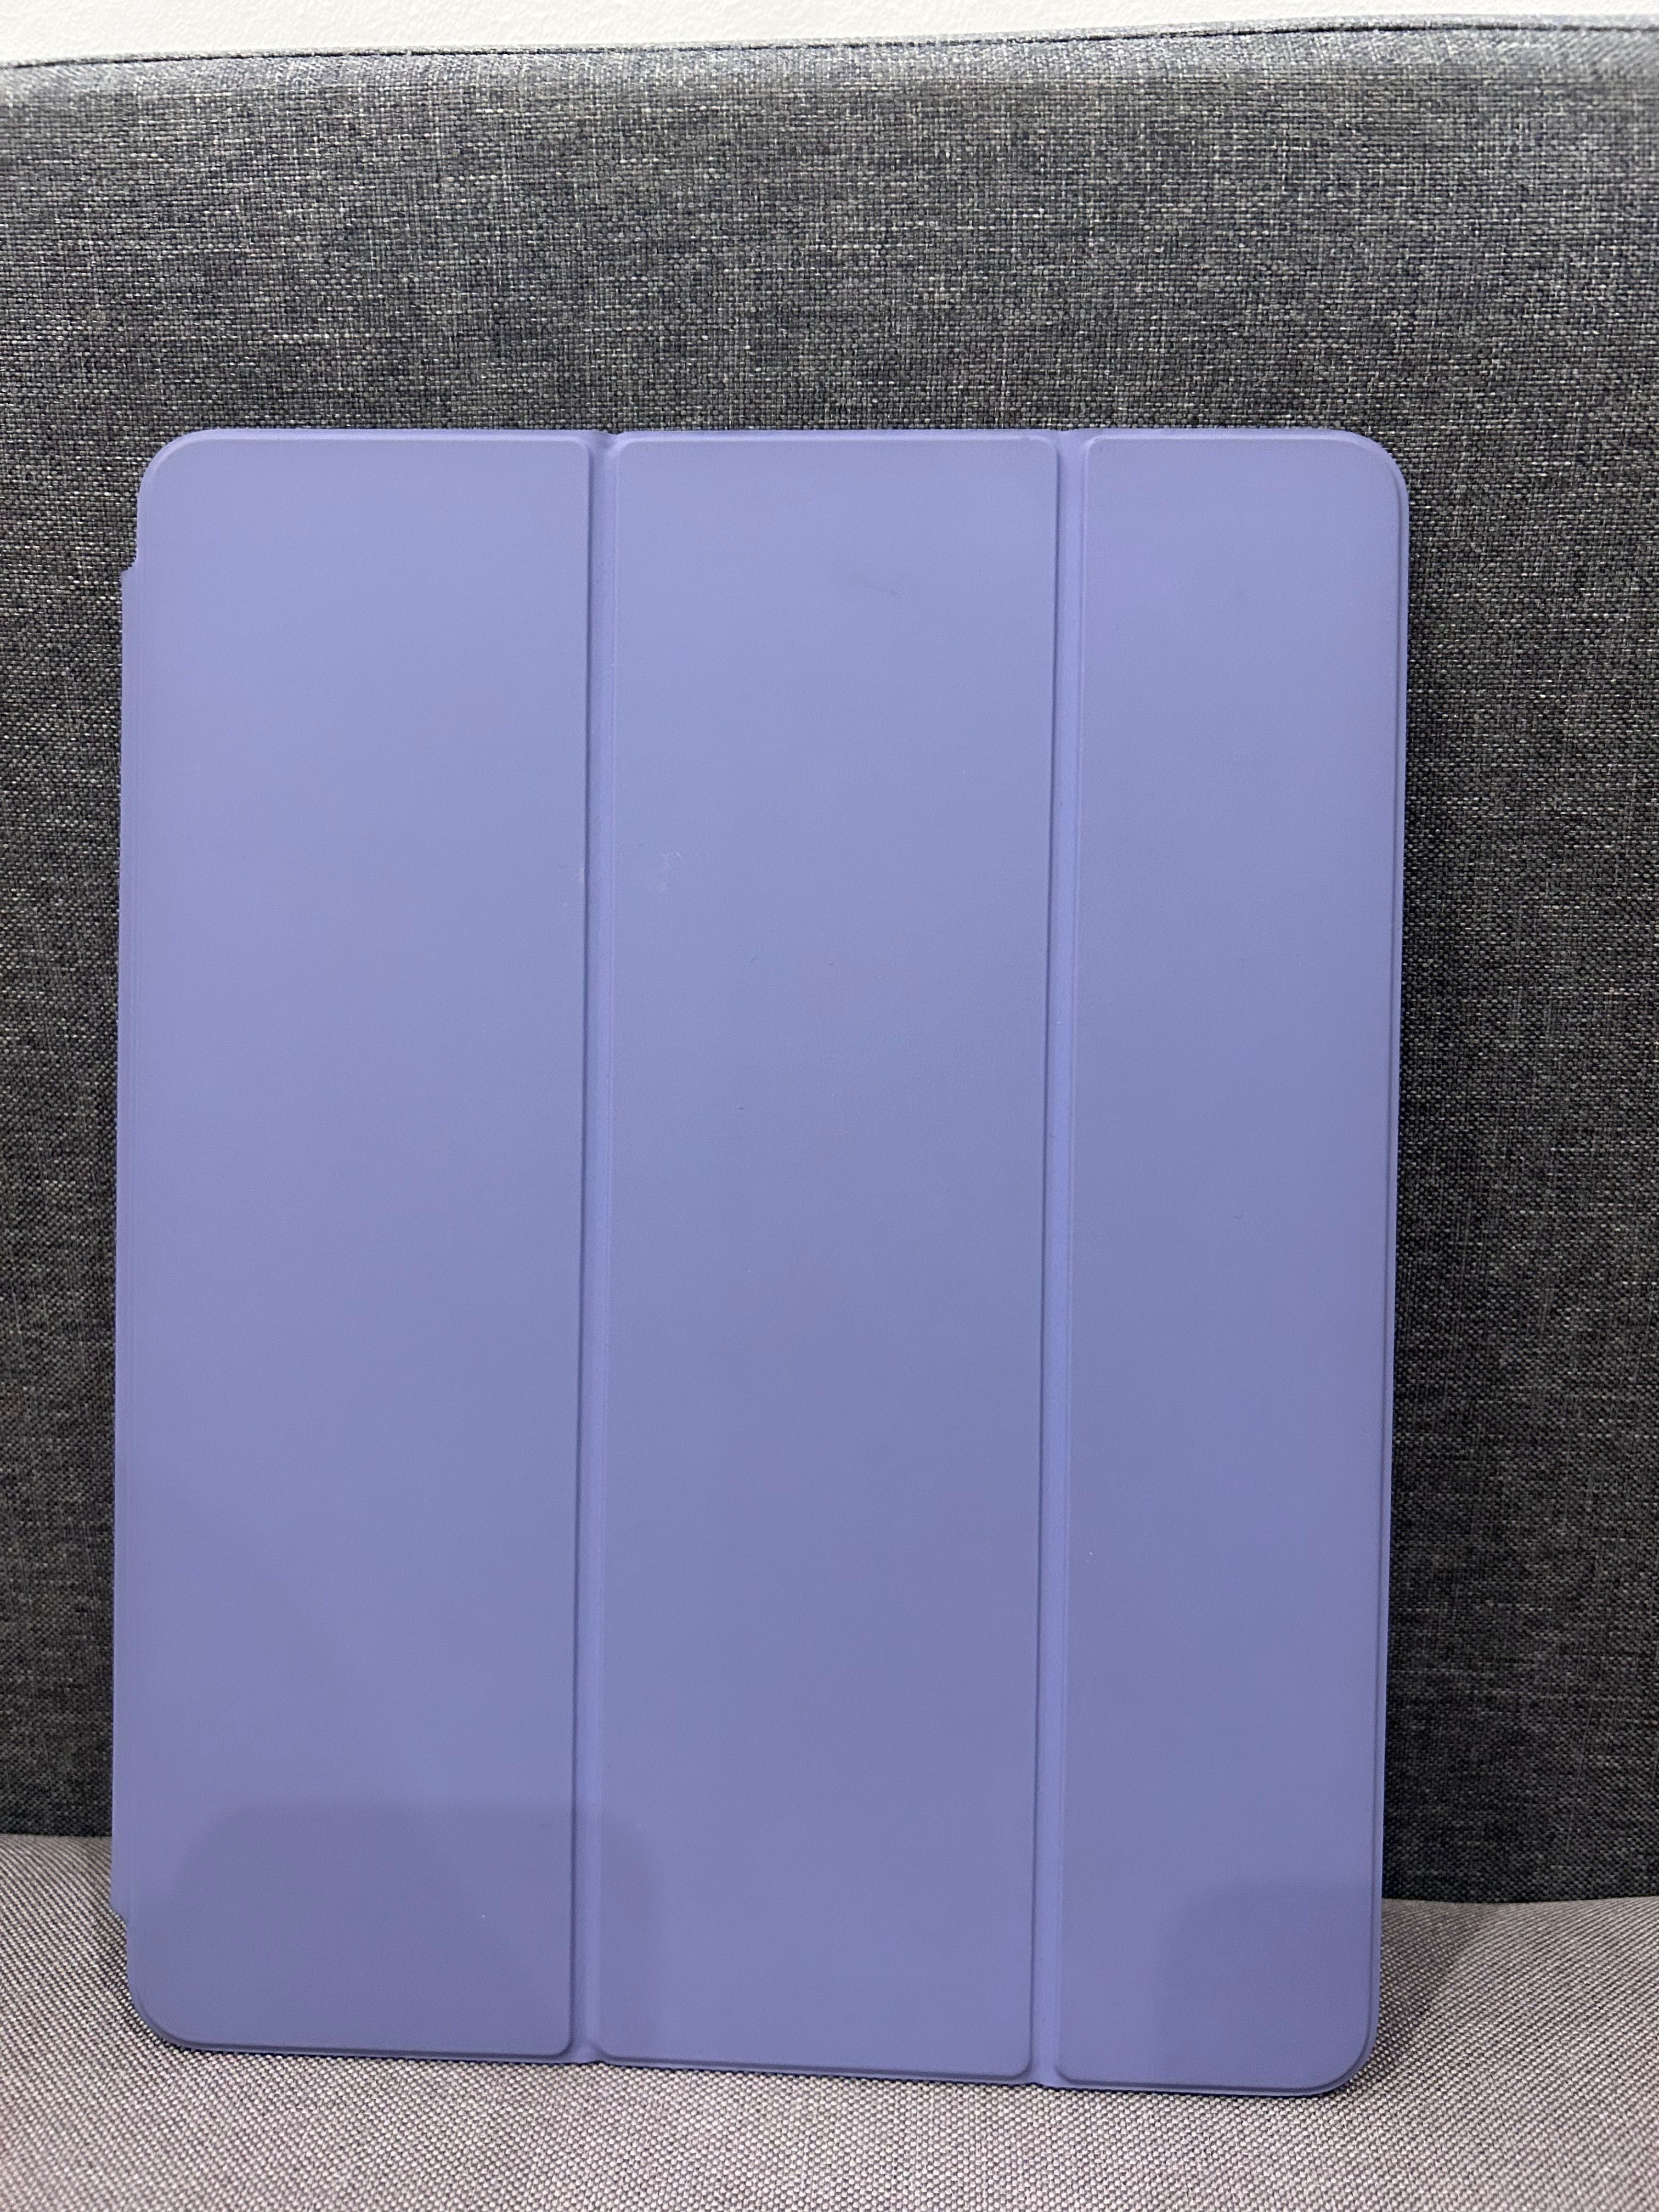 Etui na iPadPro fioletowy Smart folio